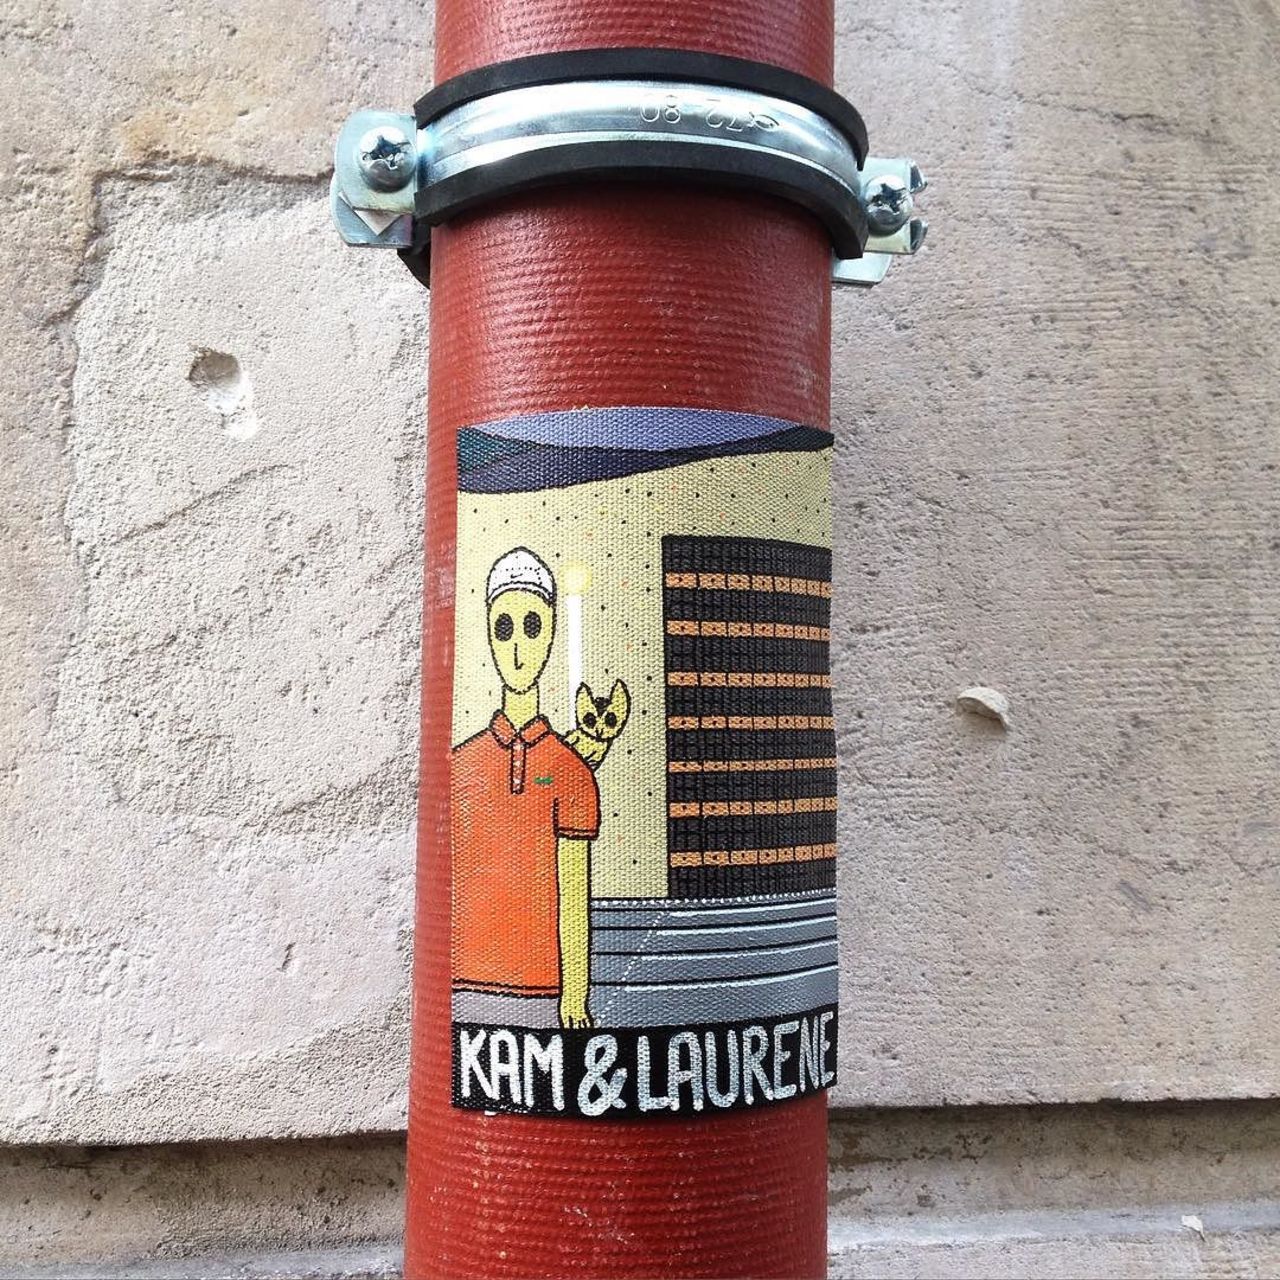 #Paris #graffiti photo by @kamlaurene http://ift.tt/1MgWOuE #StreetArt https://t.co/prySXxD6TD